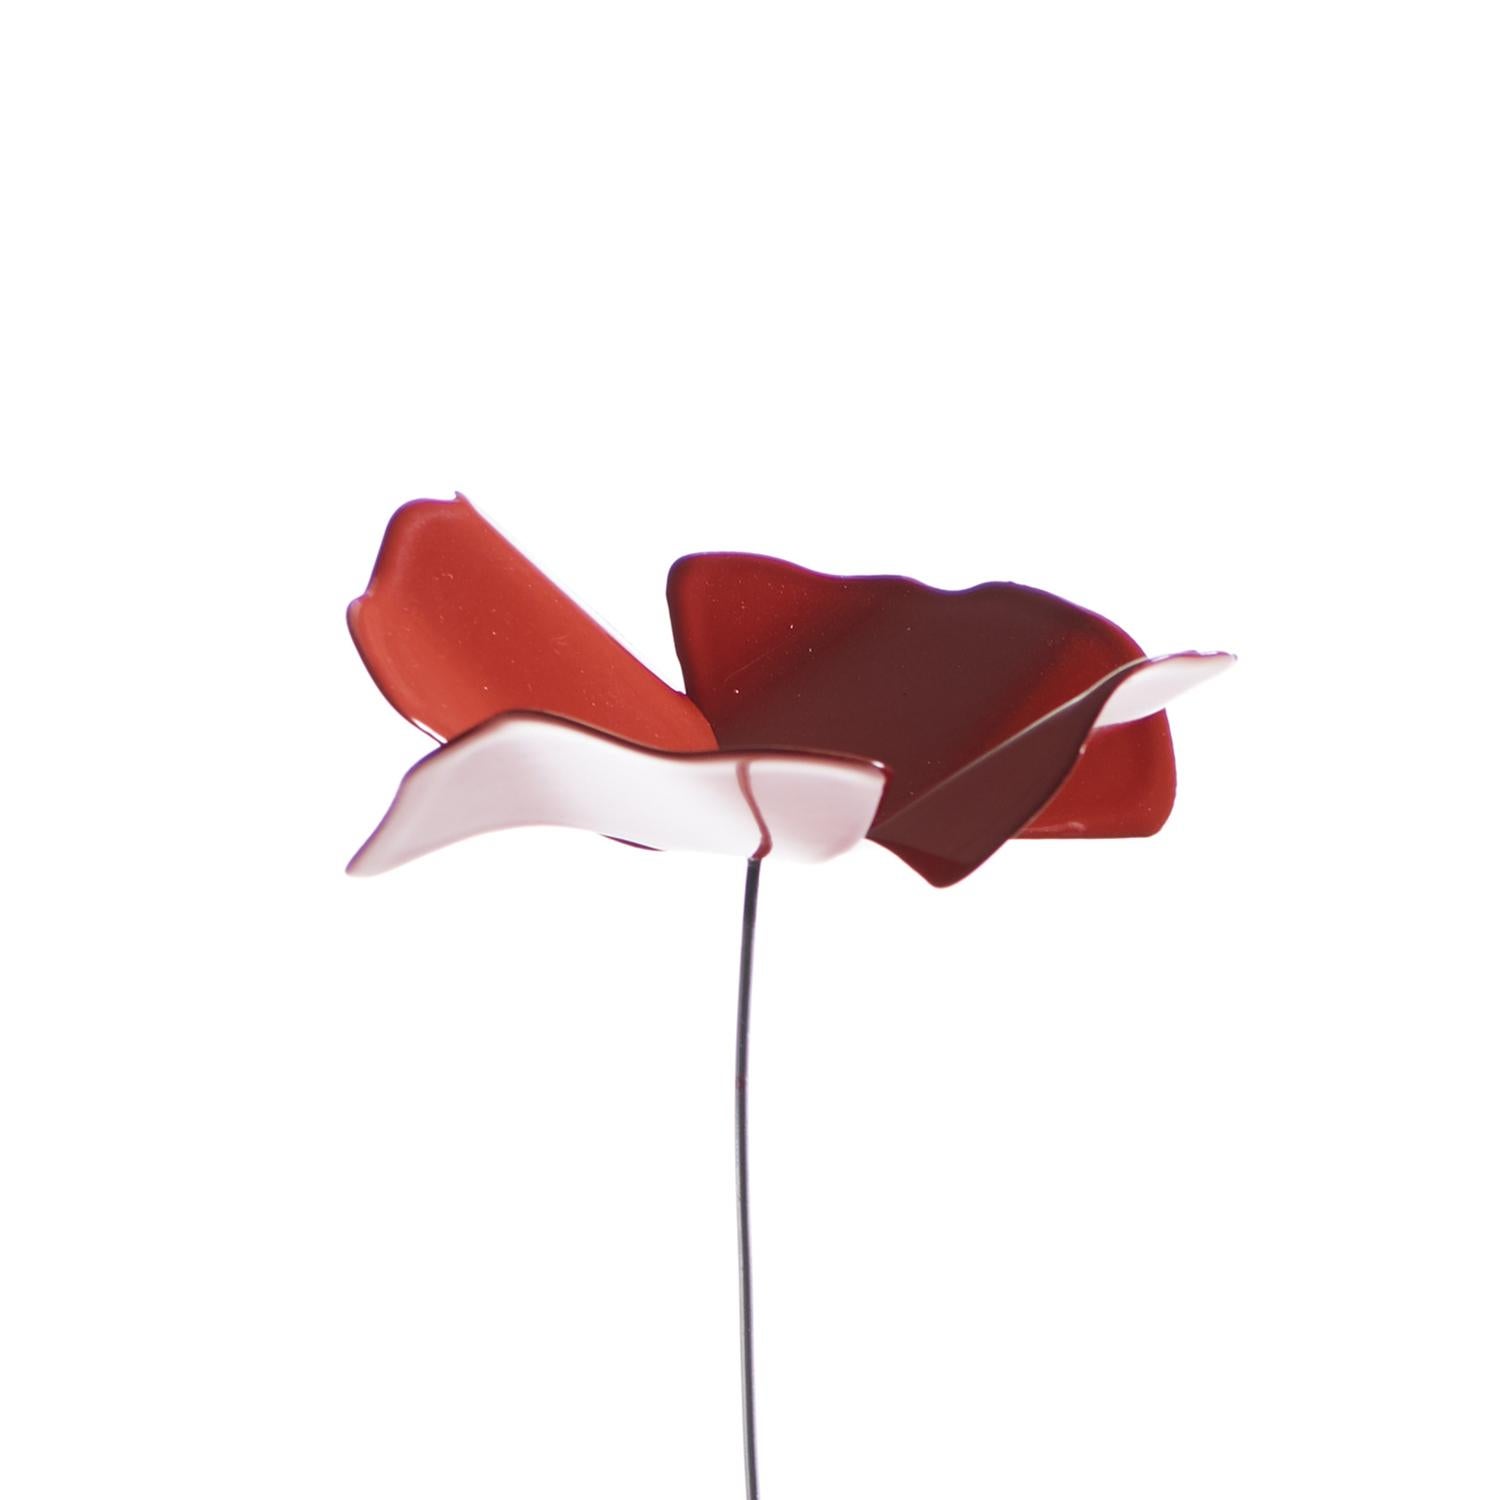 Im Angebot: Opinion Ciatti Papavero Delicato Große Tischdekoration, Multi (Red Flower with Stainless Steel Base and Stem) 2